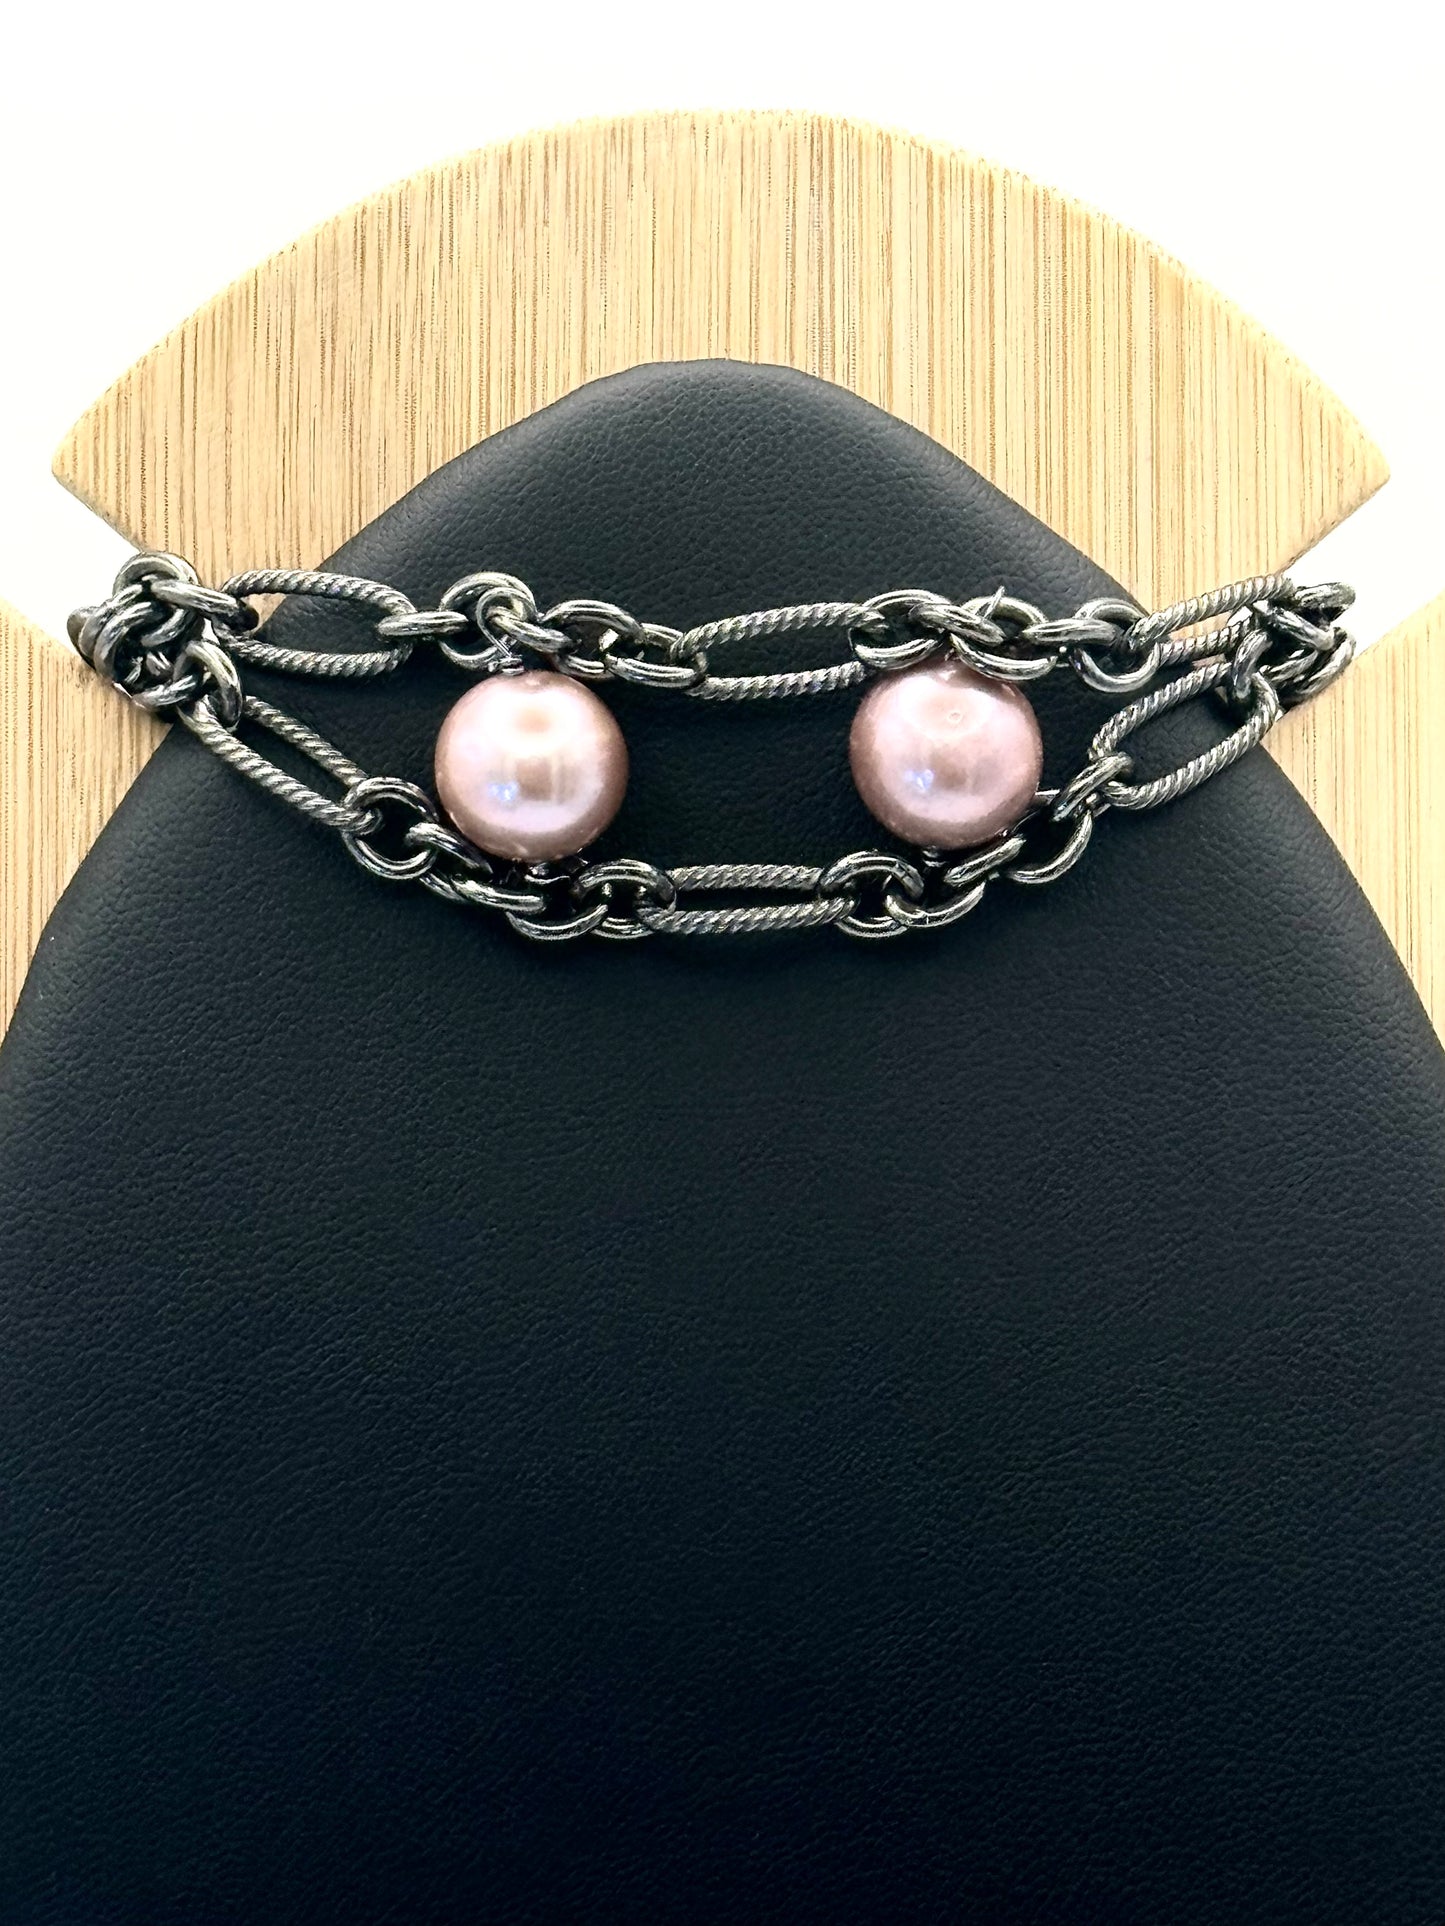 Blush Noir Bracelet: Pink Edison Pearls on Black Rhodium Silver Bracelet